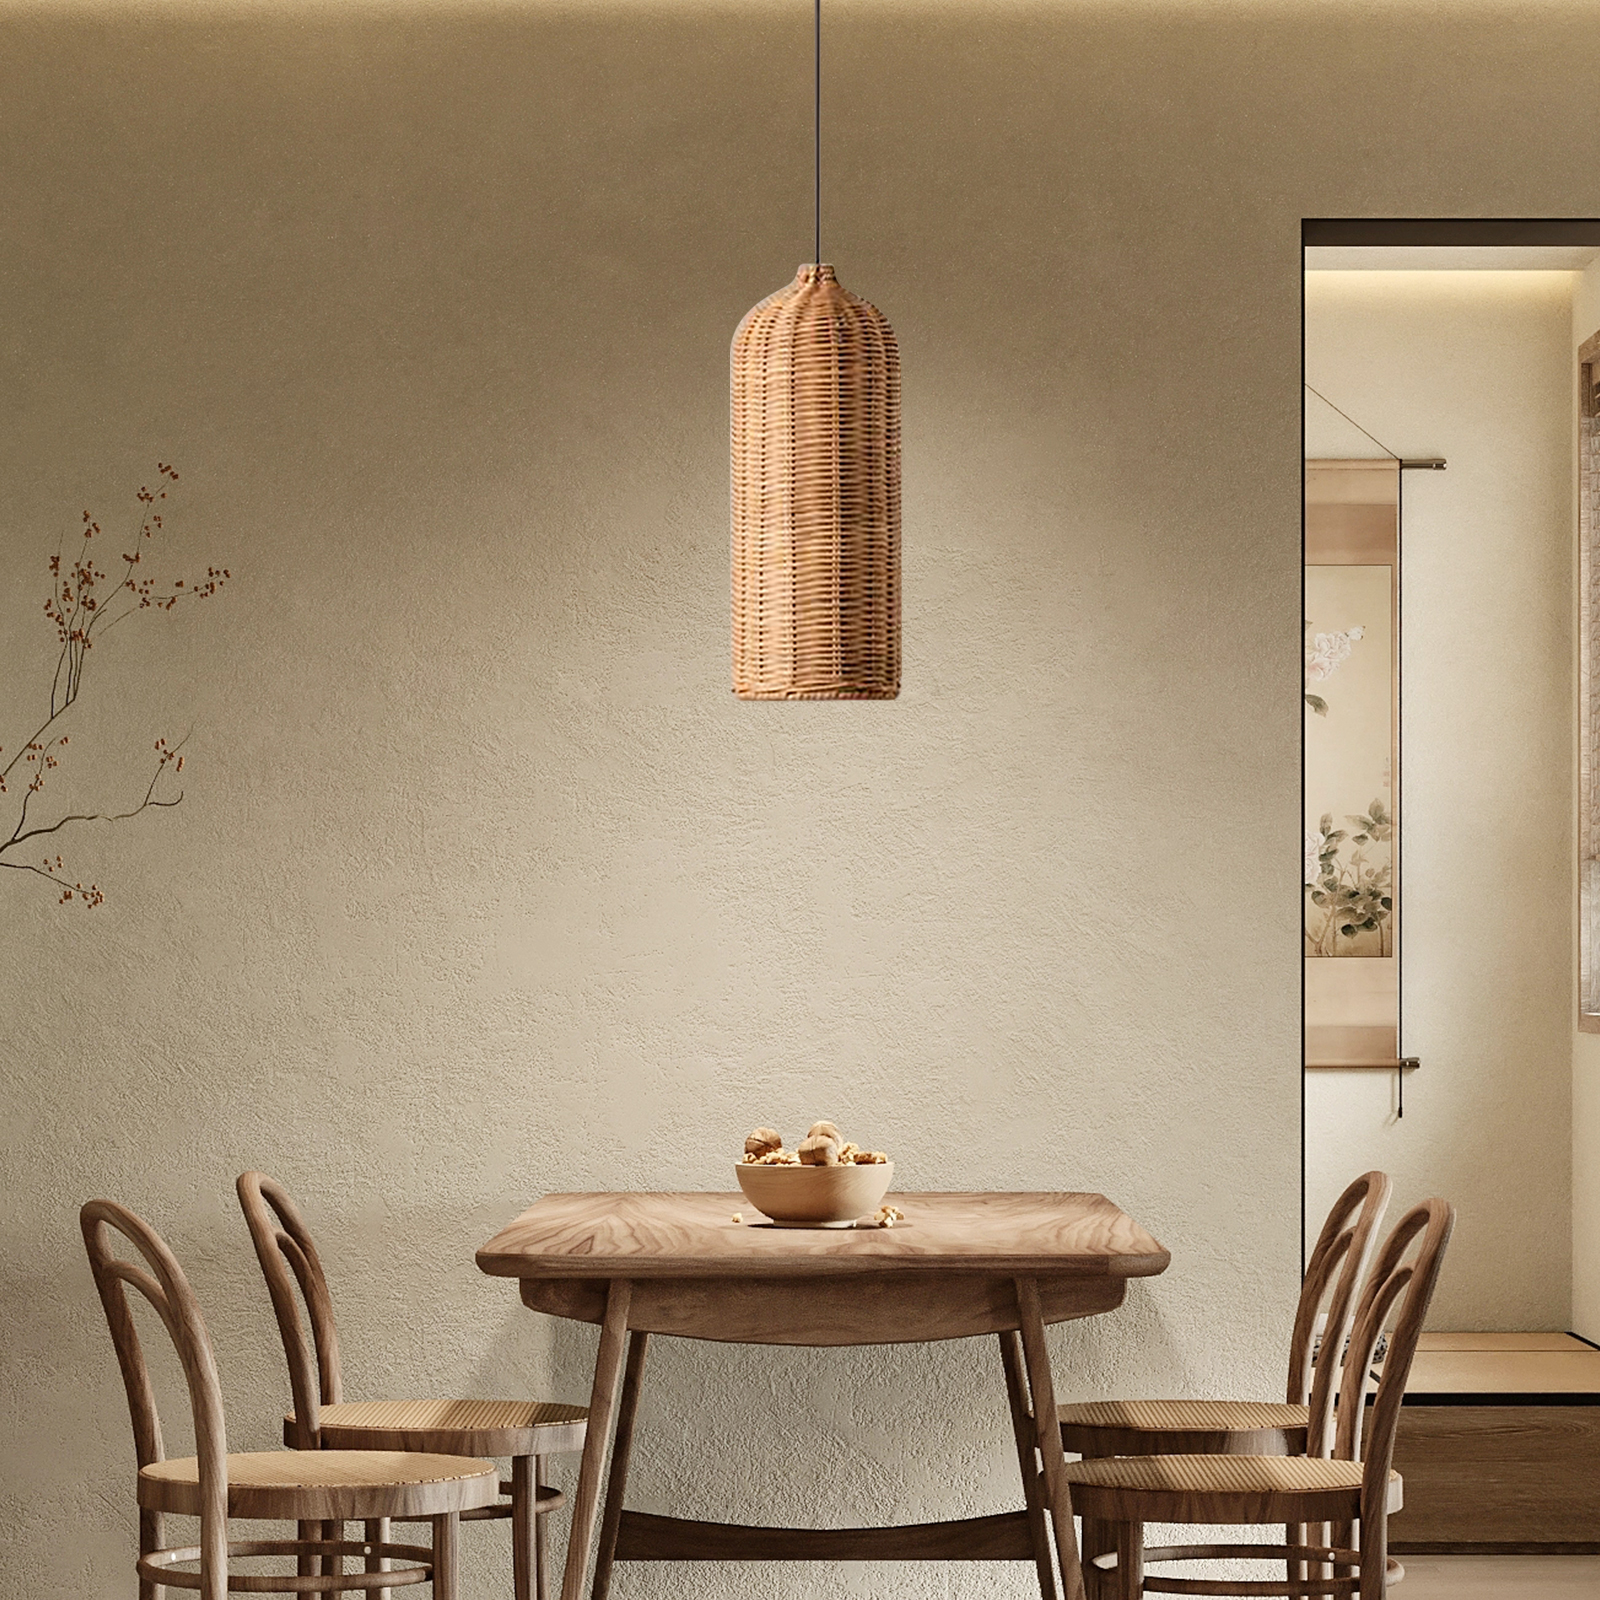 Japanese Rattan Dining Room Wabi-sabi Ratten Home Decor Pendant Light